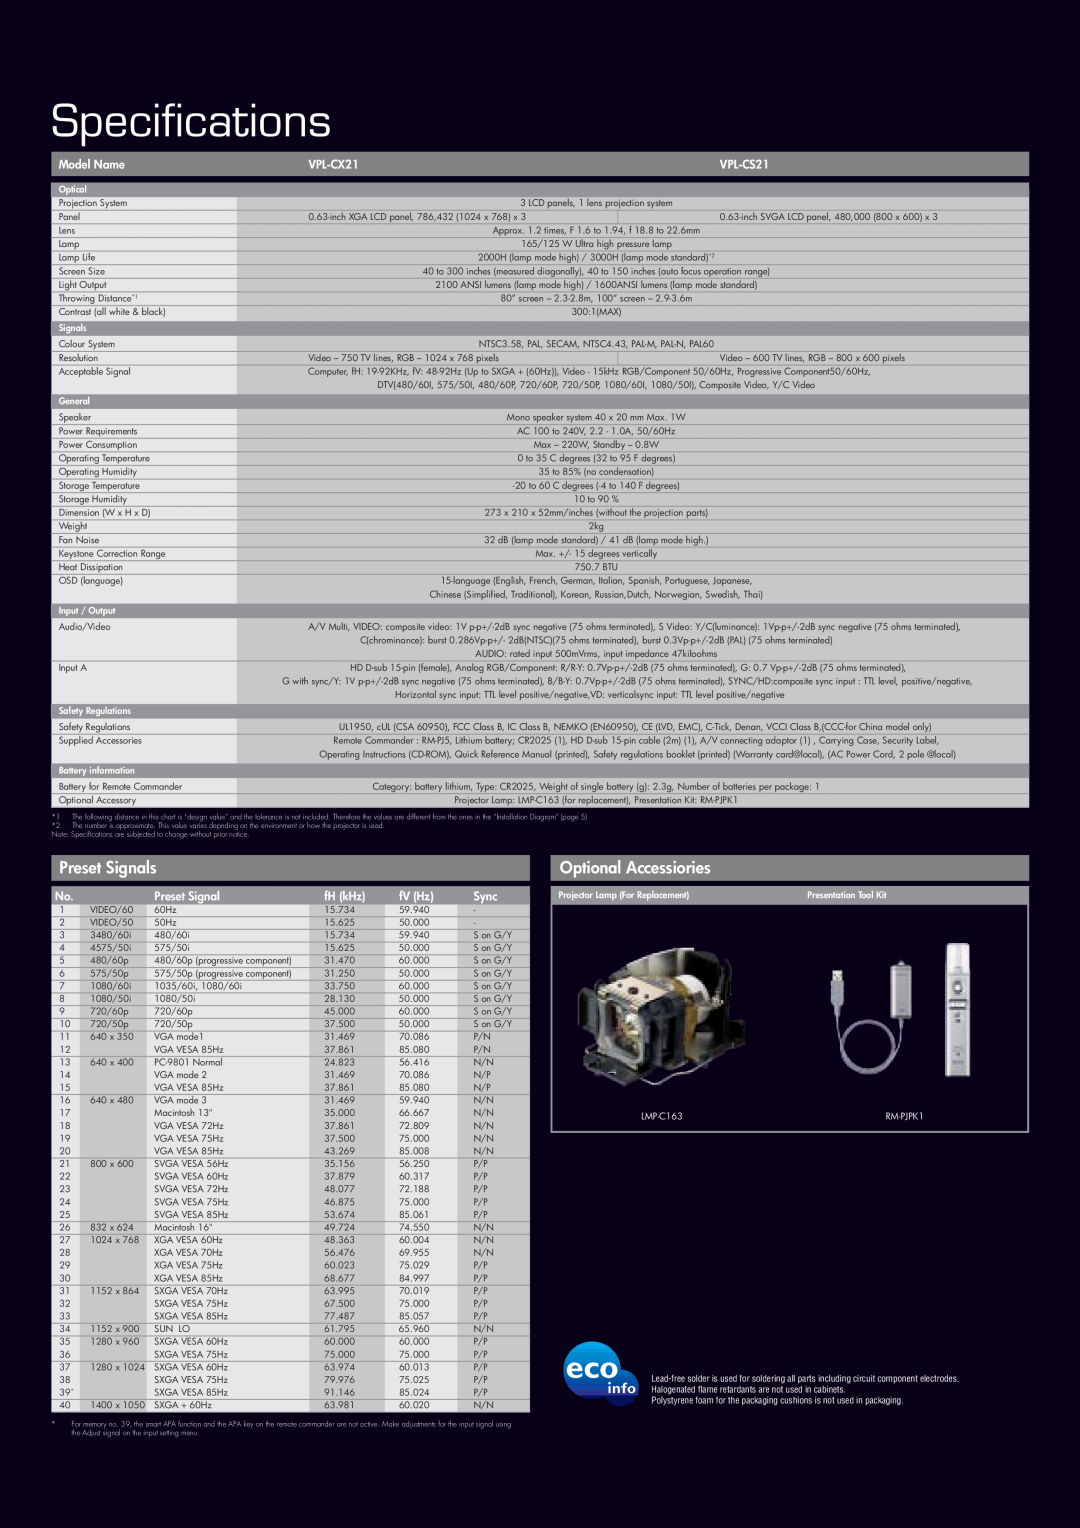 Sony VPL-CS21 manual Specifications, Model Name, VPL-CX21, Preset Signal, fH kHz, fV Hz, Sync, Optical, Signals, General 